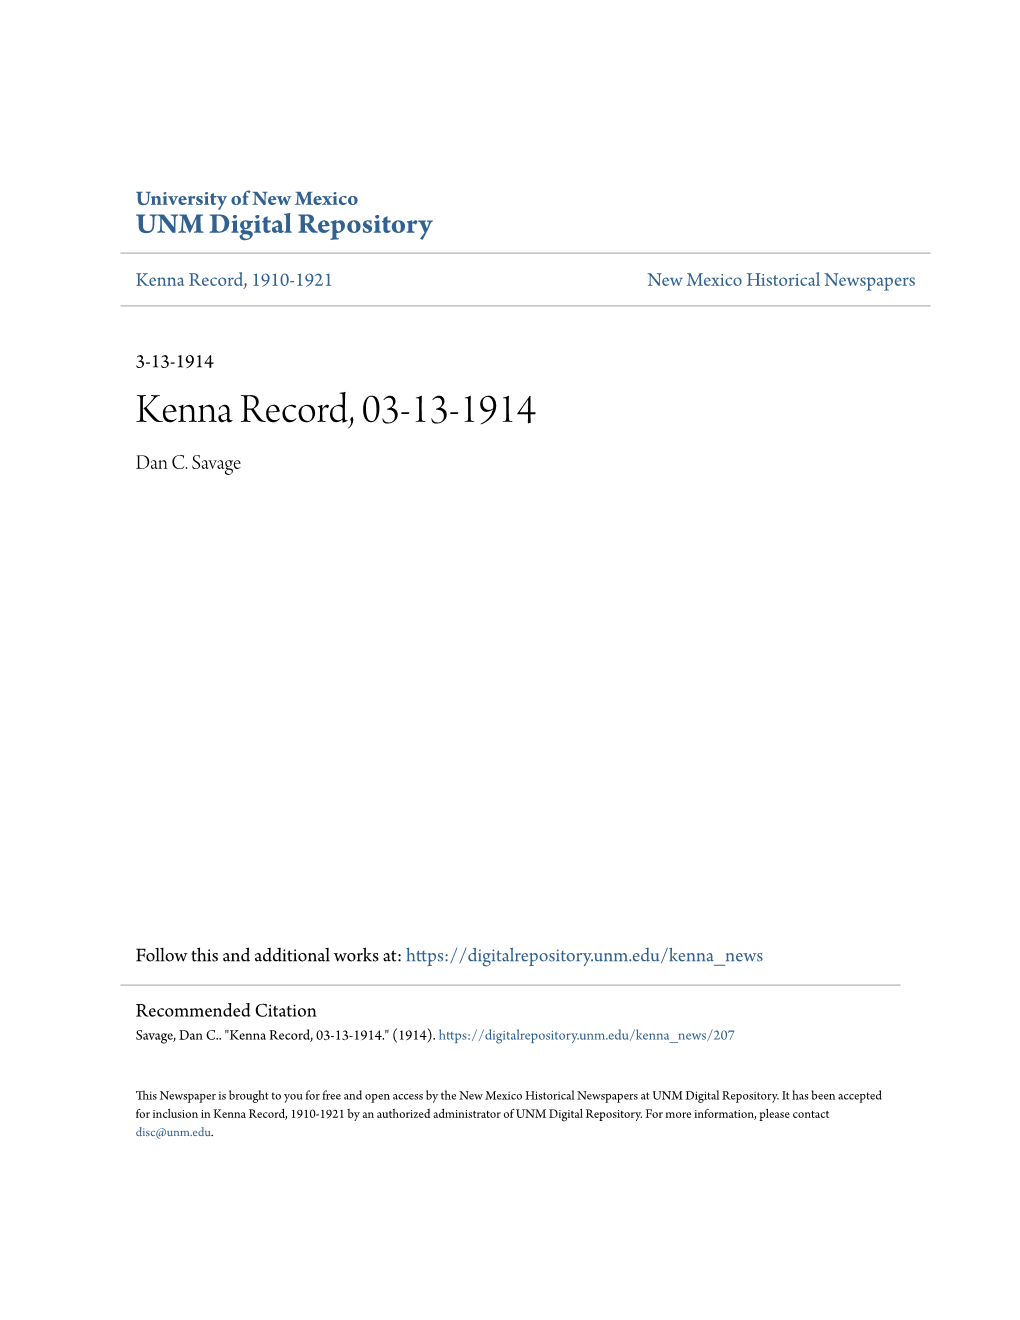 Kenna Record, 03-13-1914 Dan C